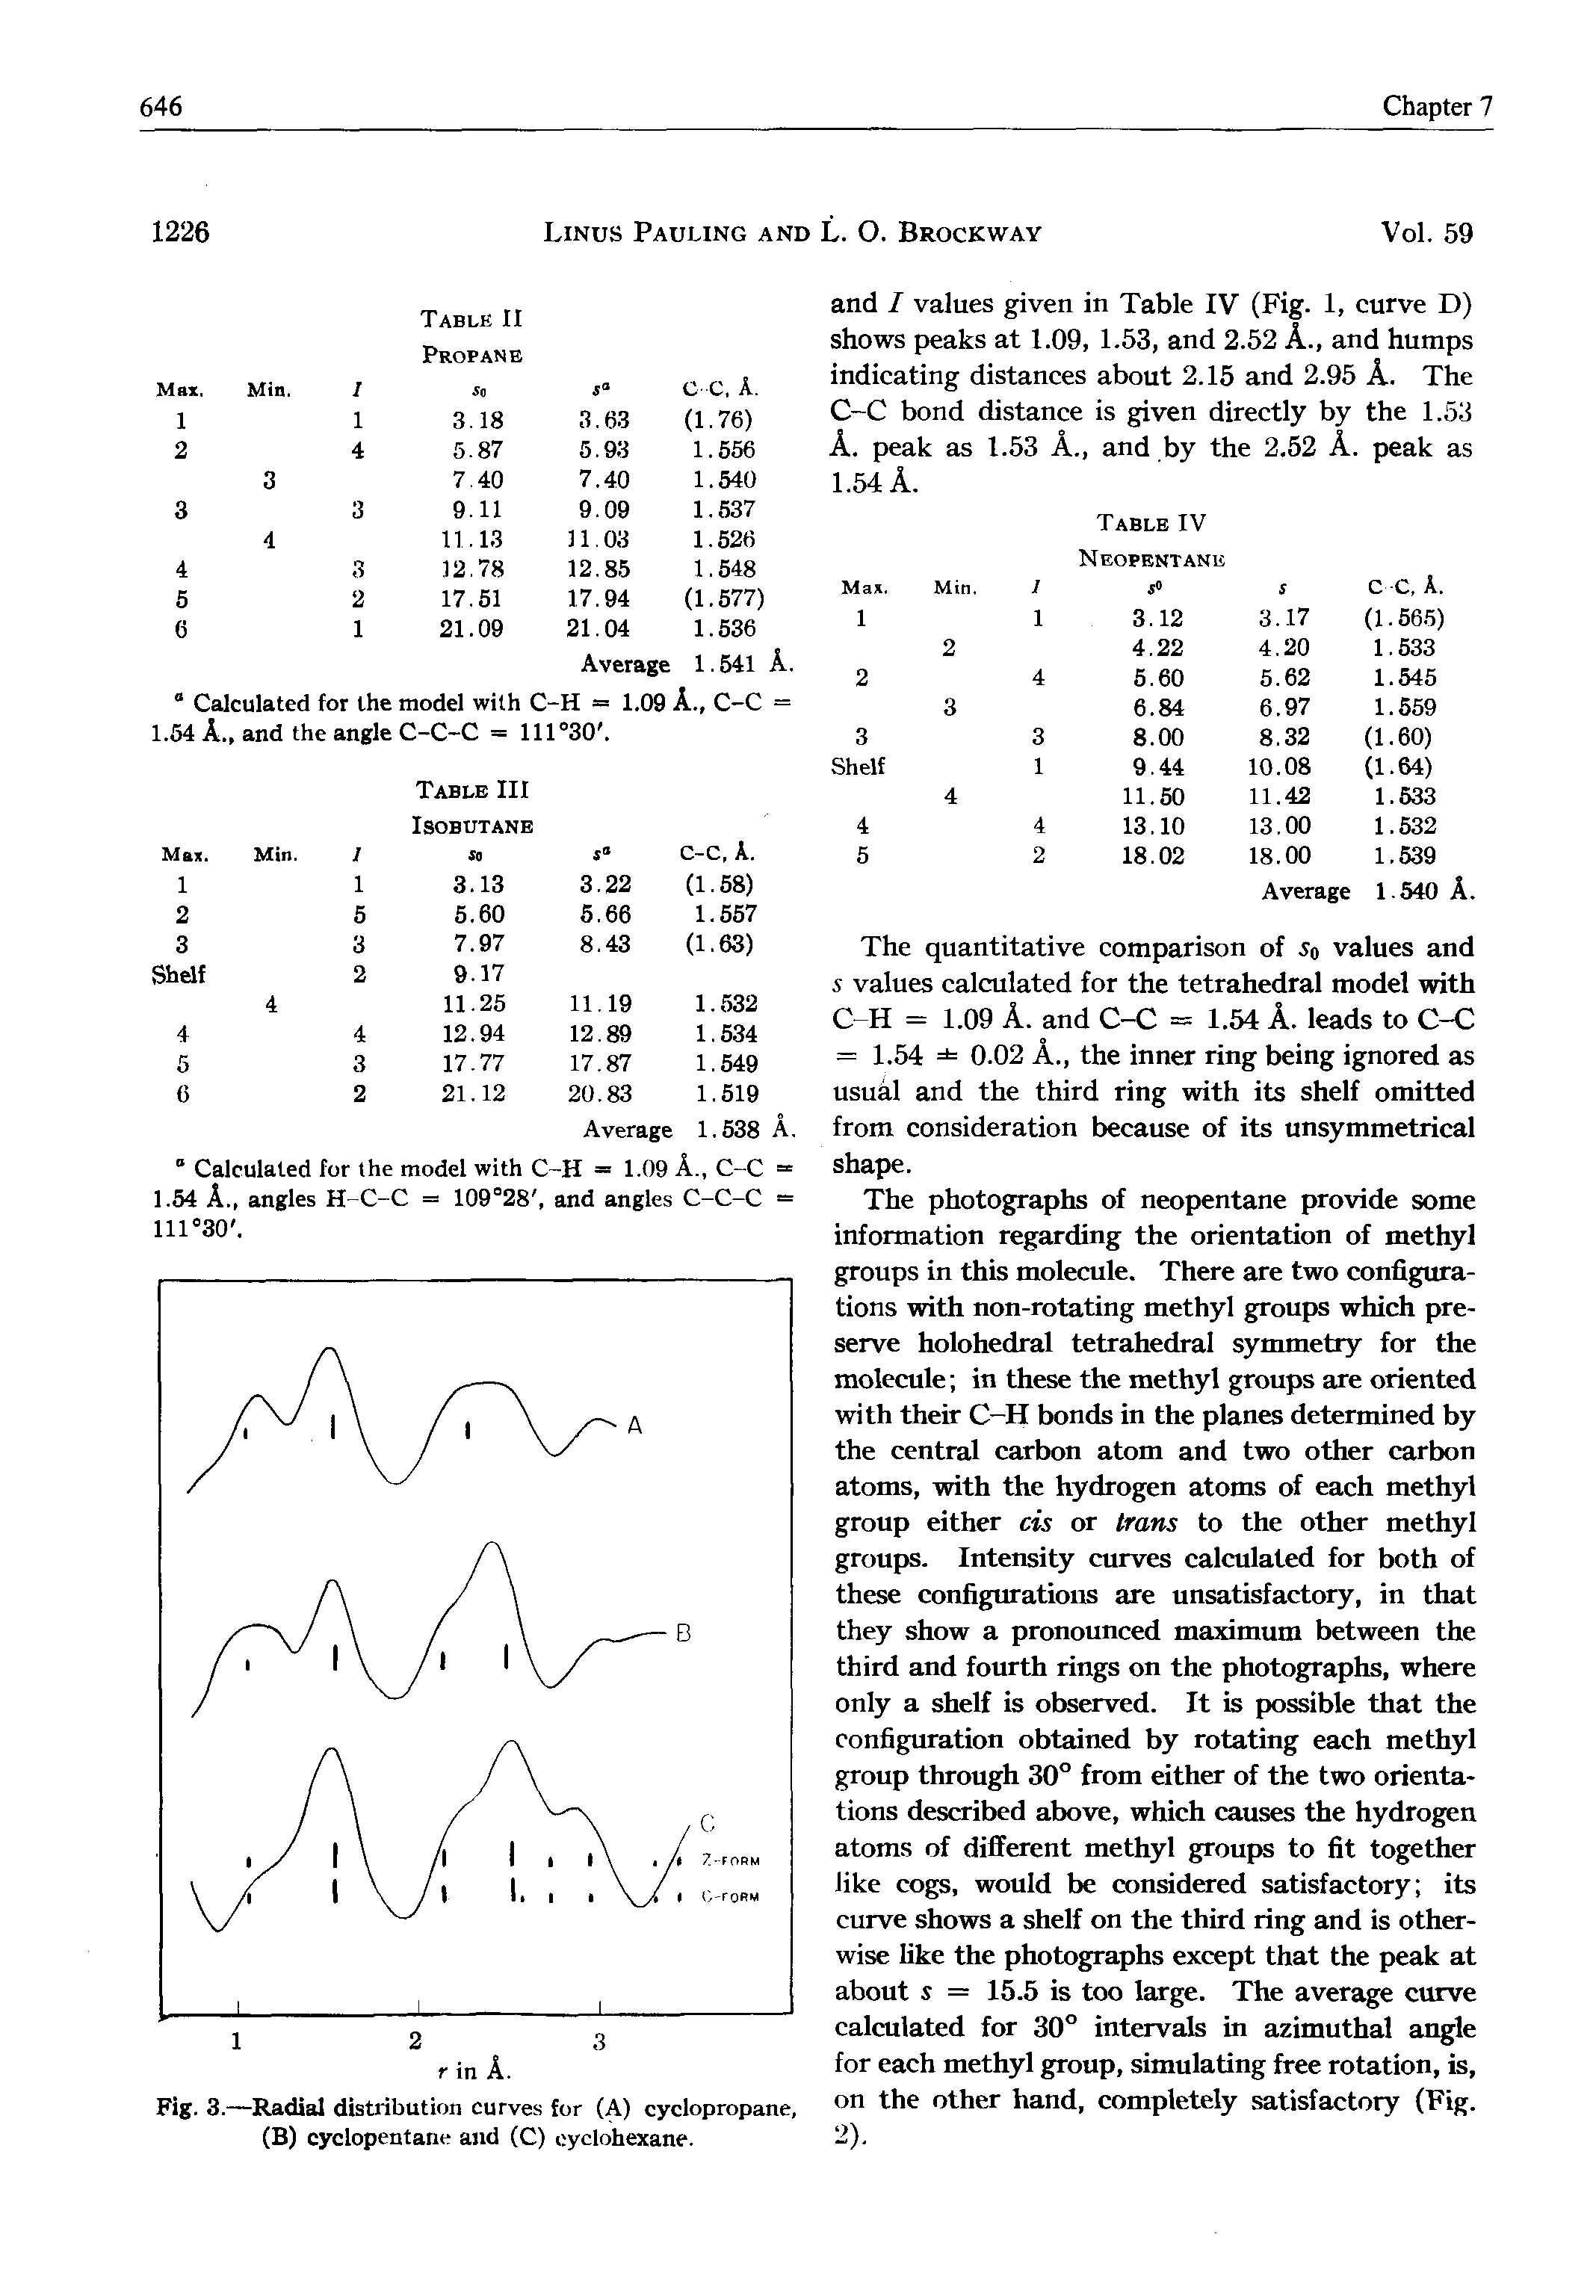 Fig. 3.—Radial distribution curves for (A) cyclopropane, (B) cyclopentane and (C) cyclohexane.